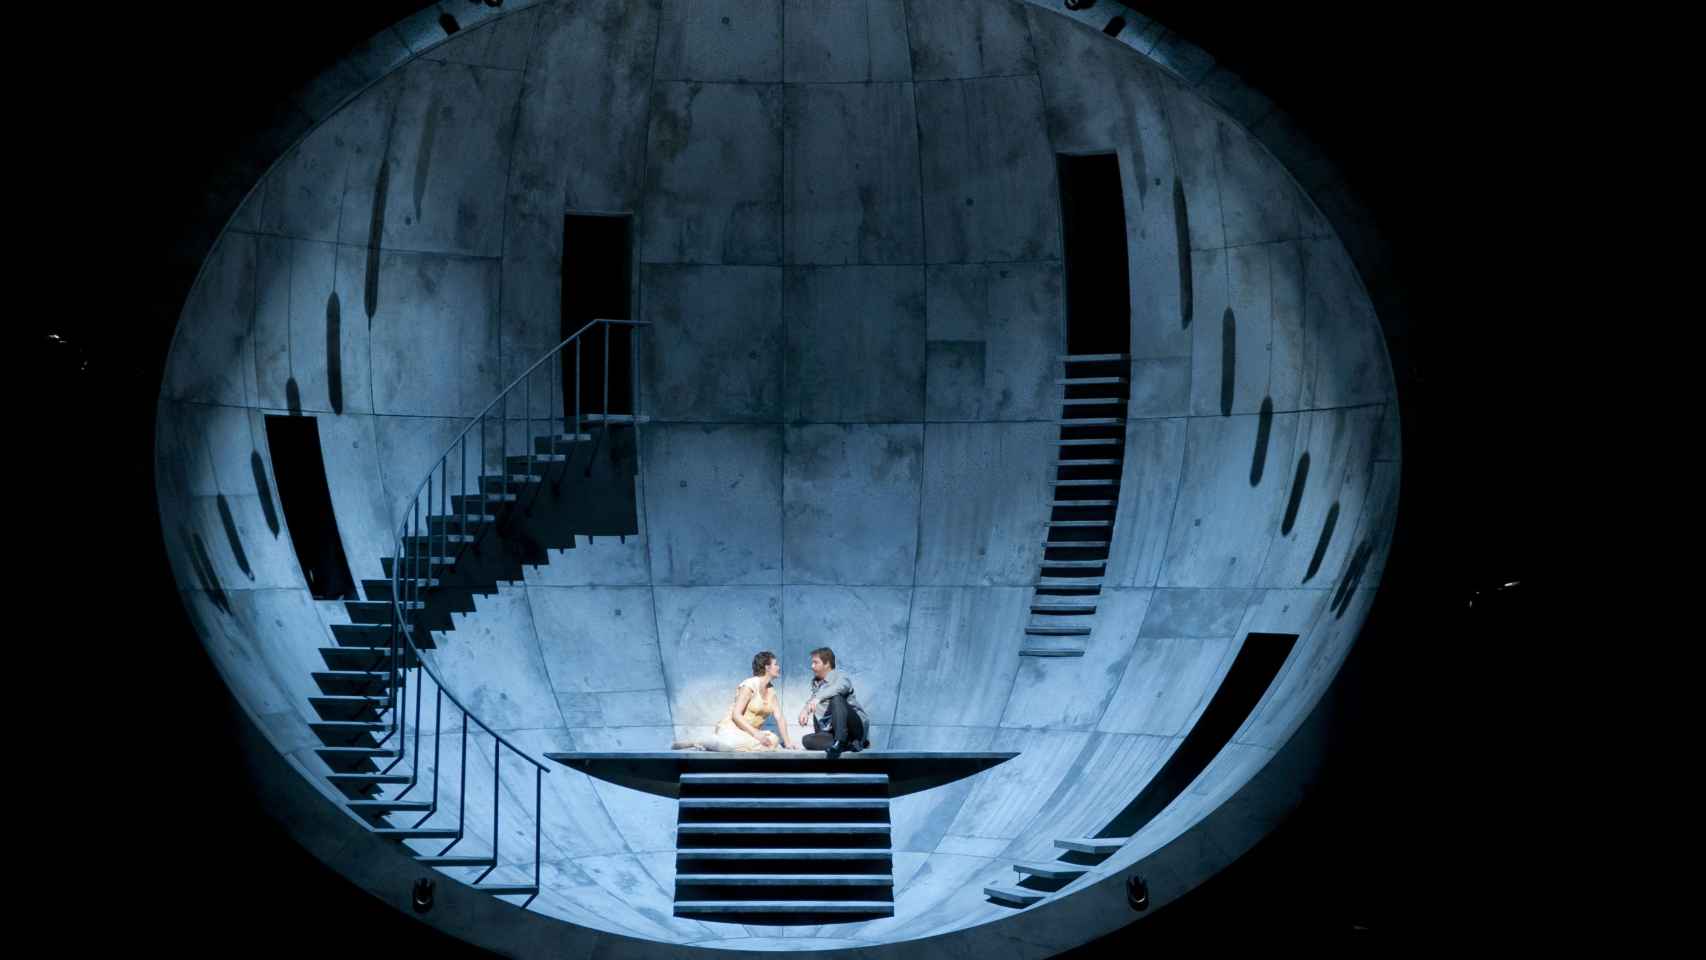 'Tristan und Isolde' de Richard Wagner vuelve al Liceu de Barcelona / Franchella Stofleth